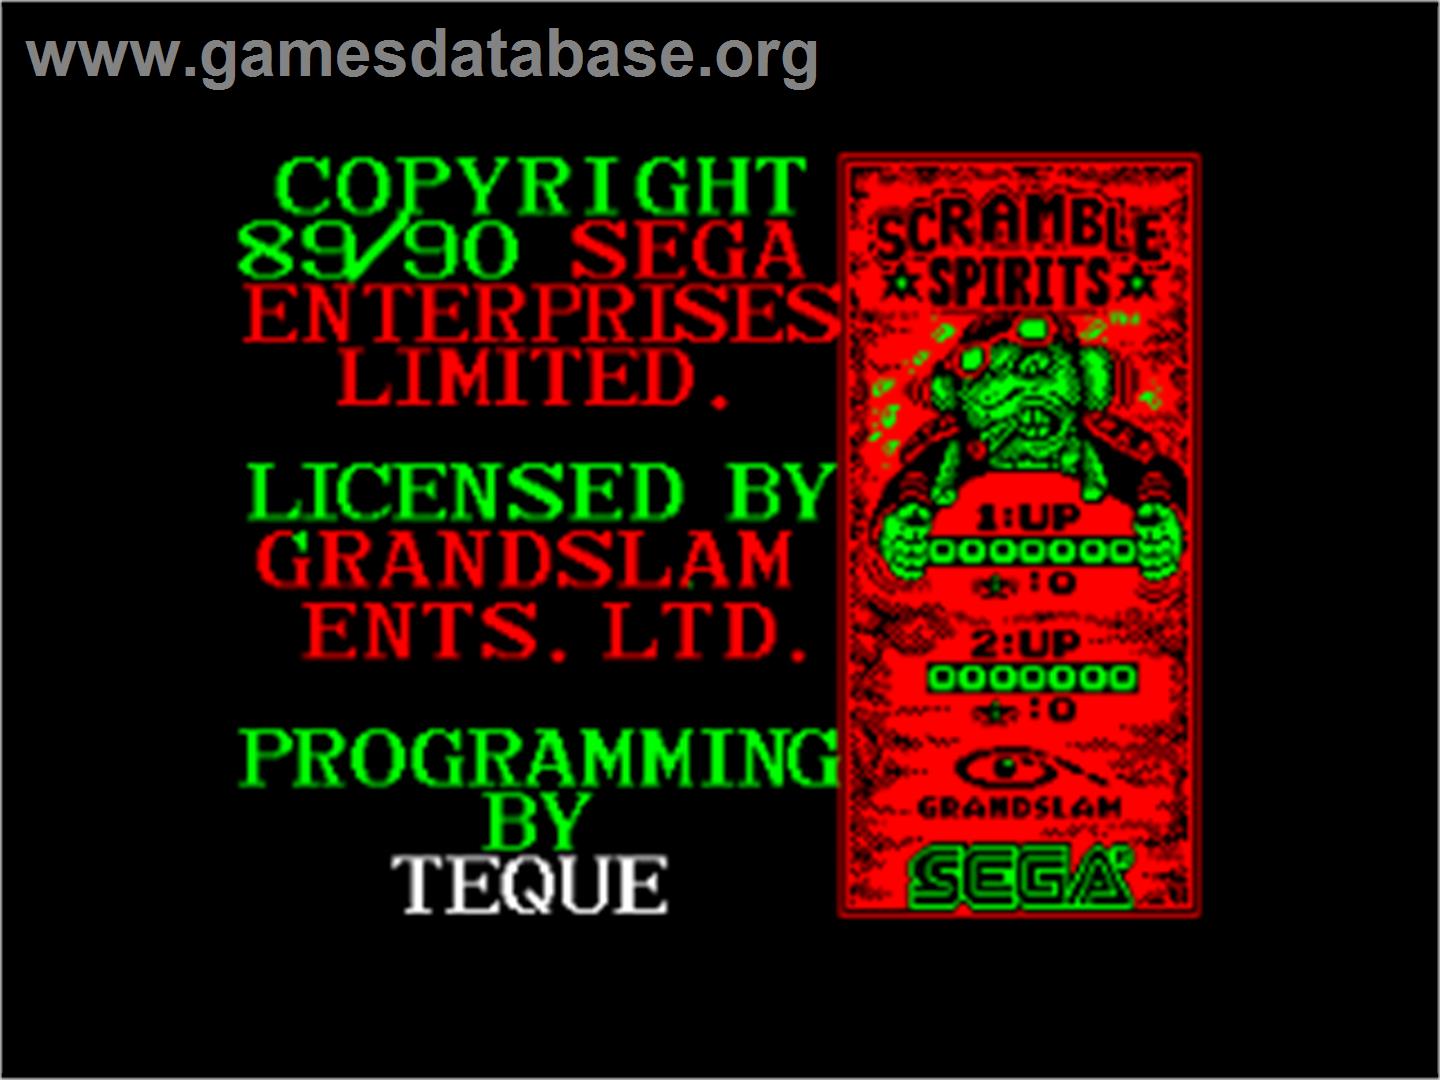 Scramble Spirits - Amstrad CPC - Artwork - Title Screen